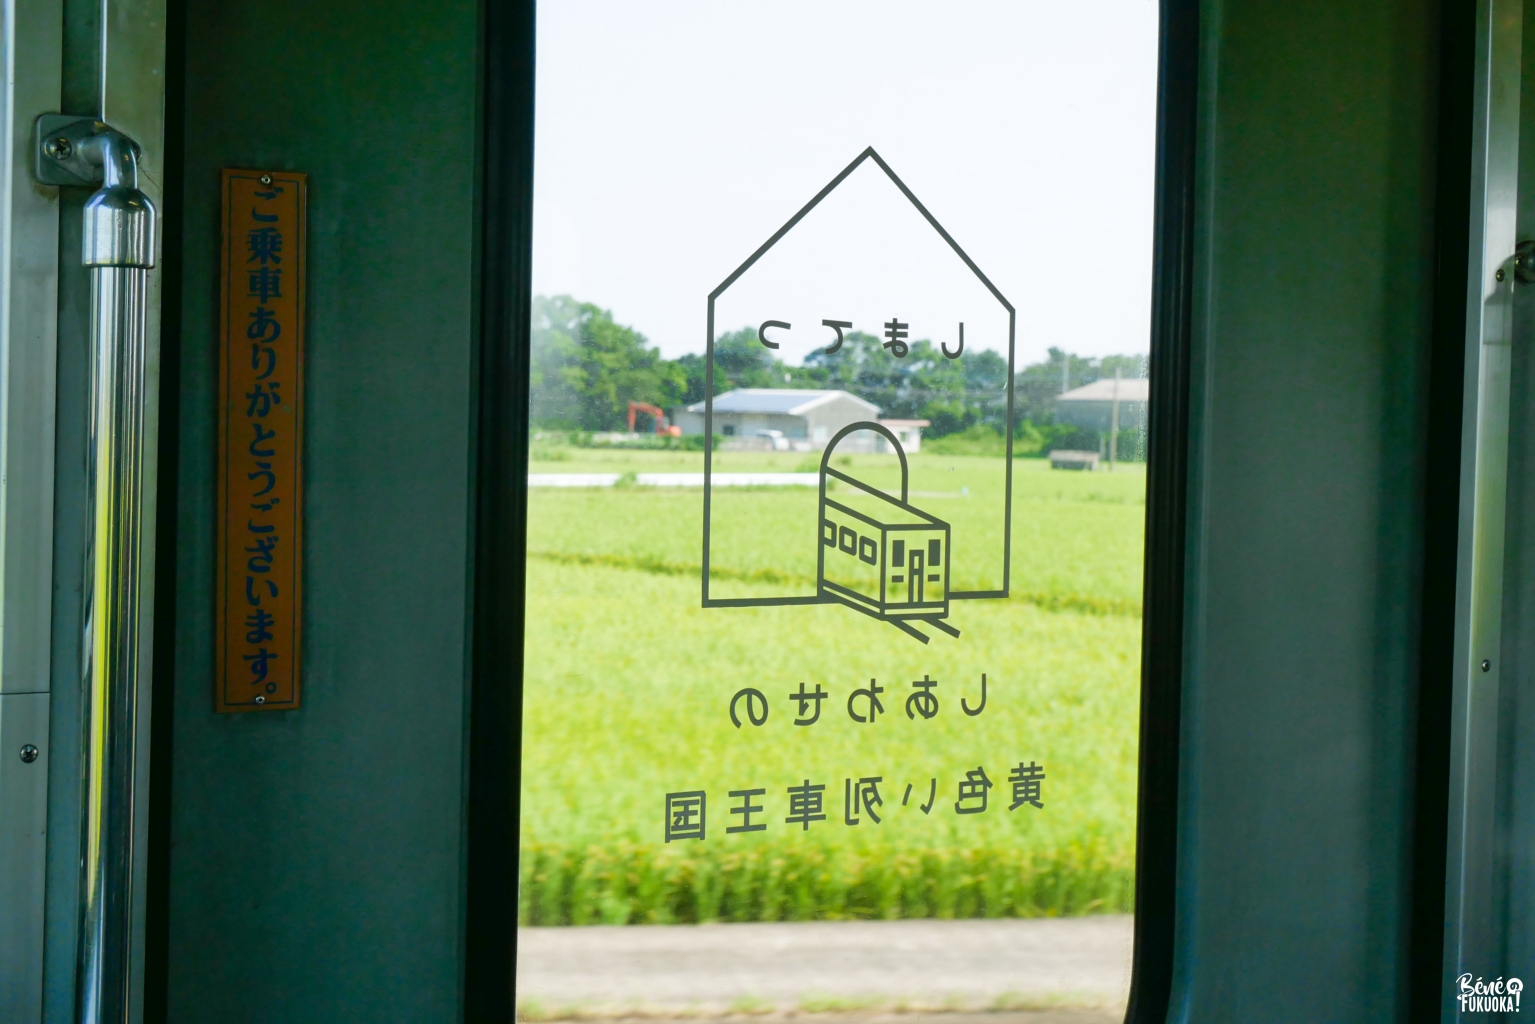 À bord de la ligne Shimabara Railway